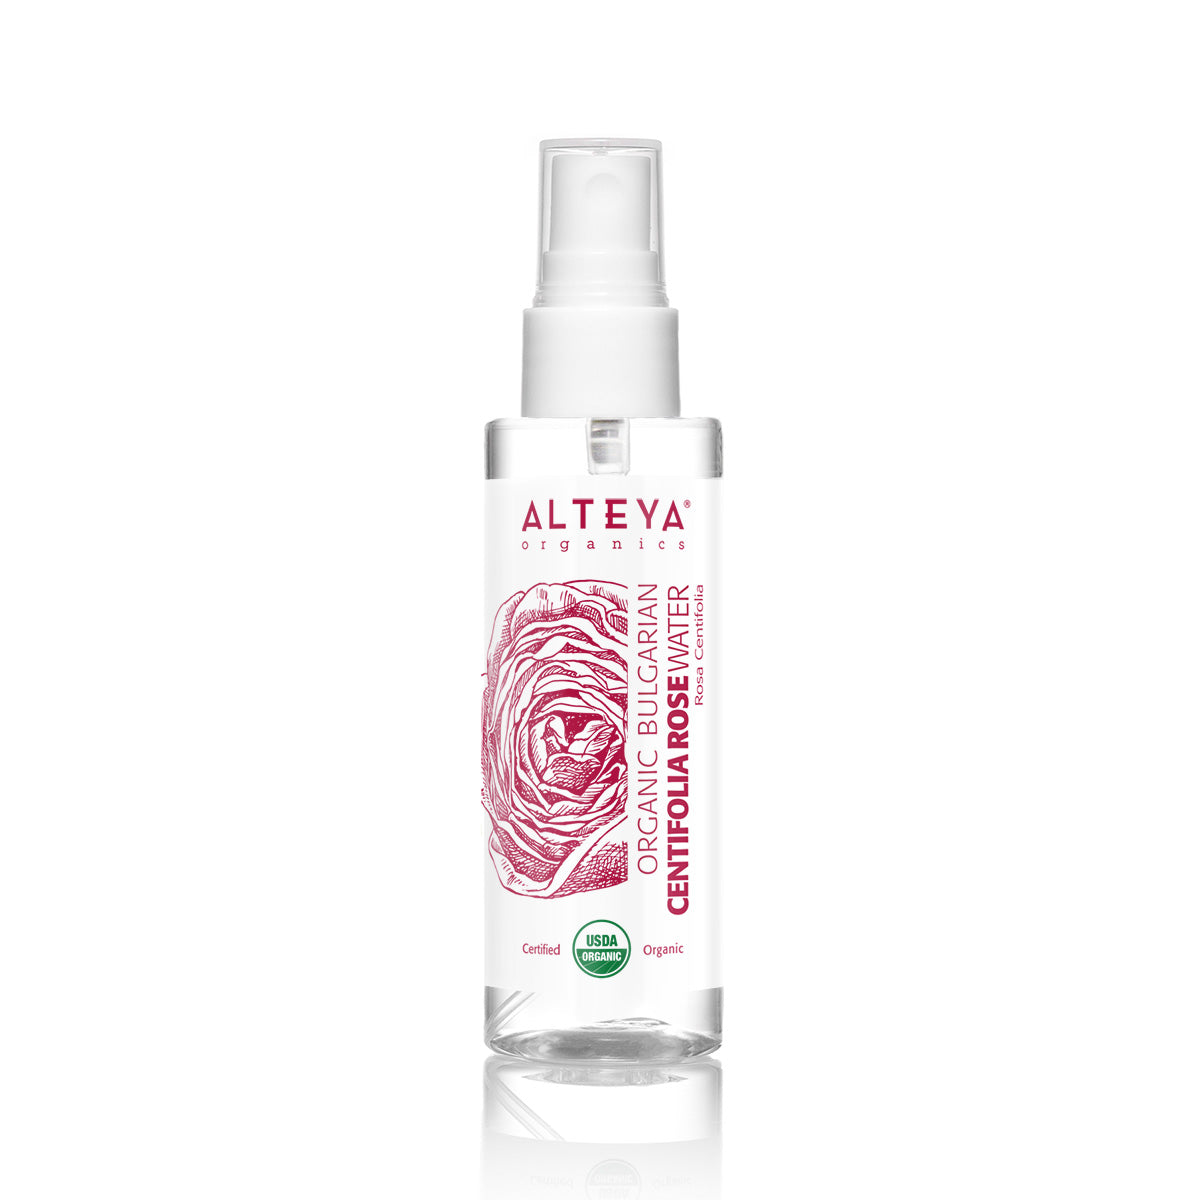 A bottle of Bulgarian Organic Centifolia rose water 3.4 Fl Oz by Alteya Organics on a white background.